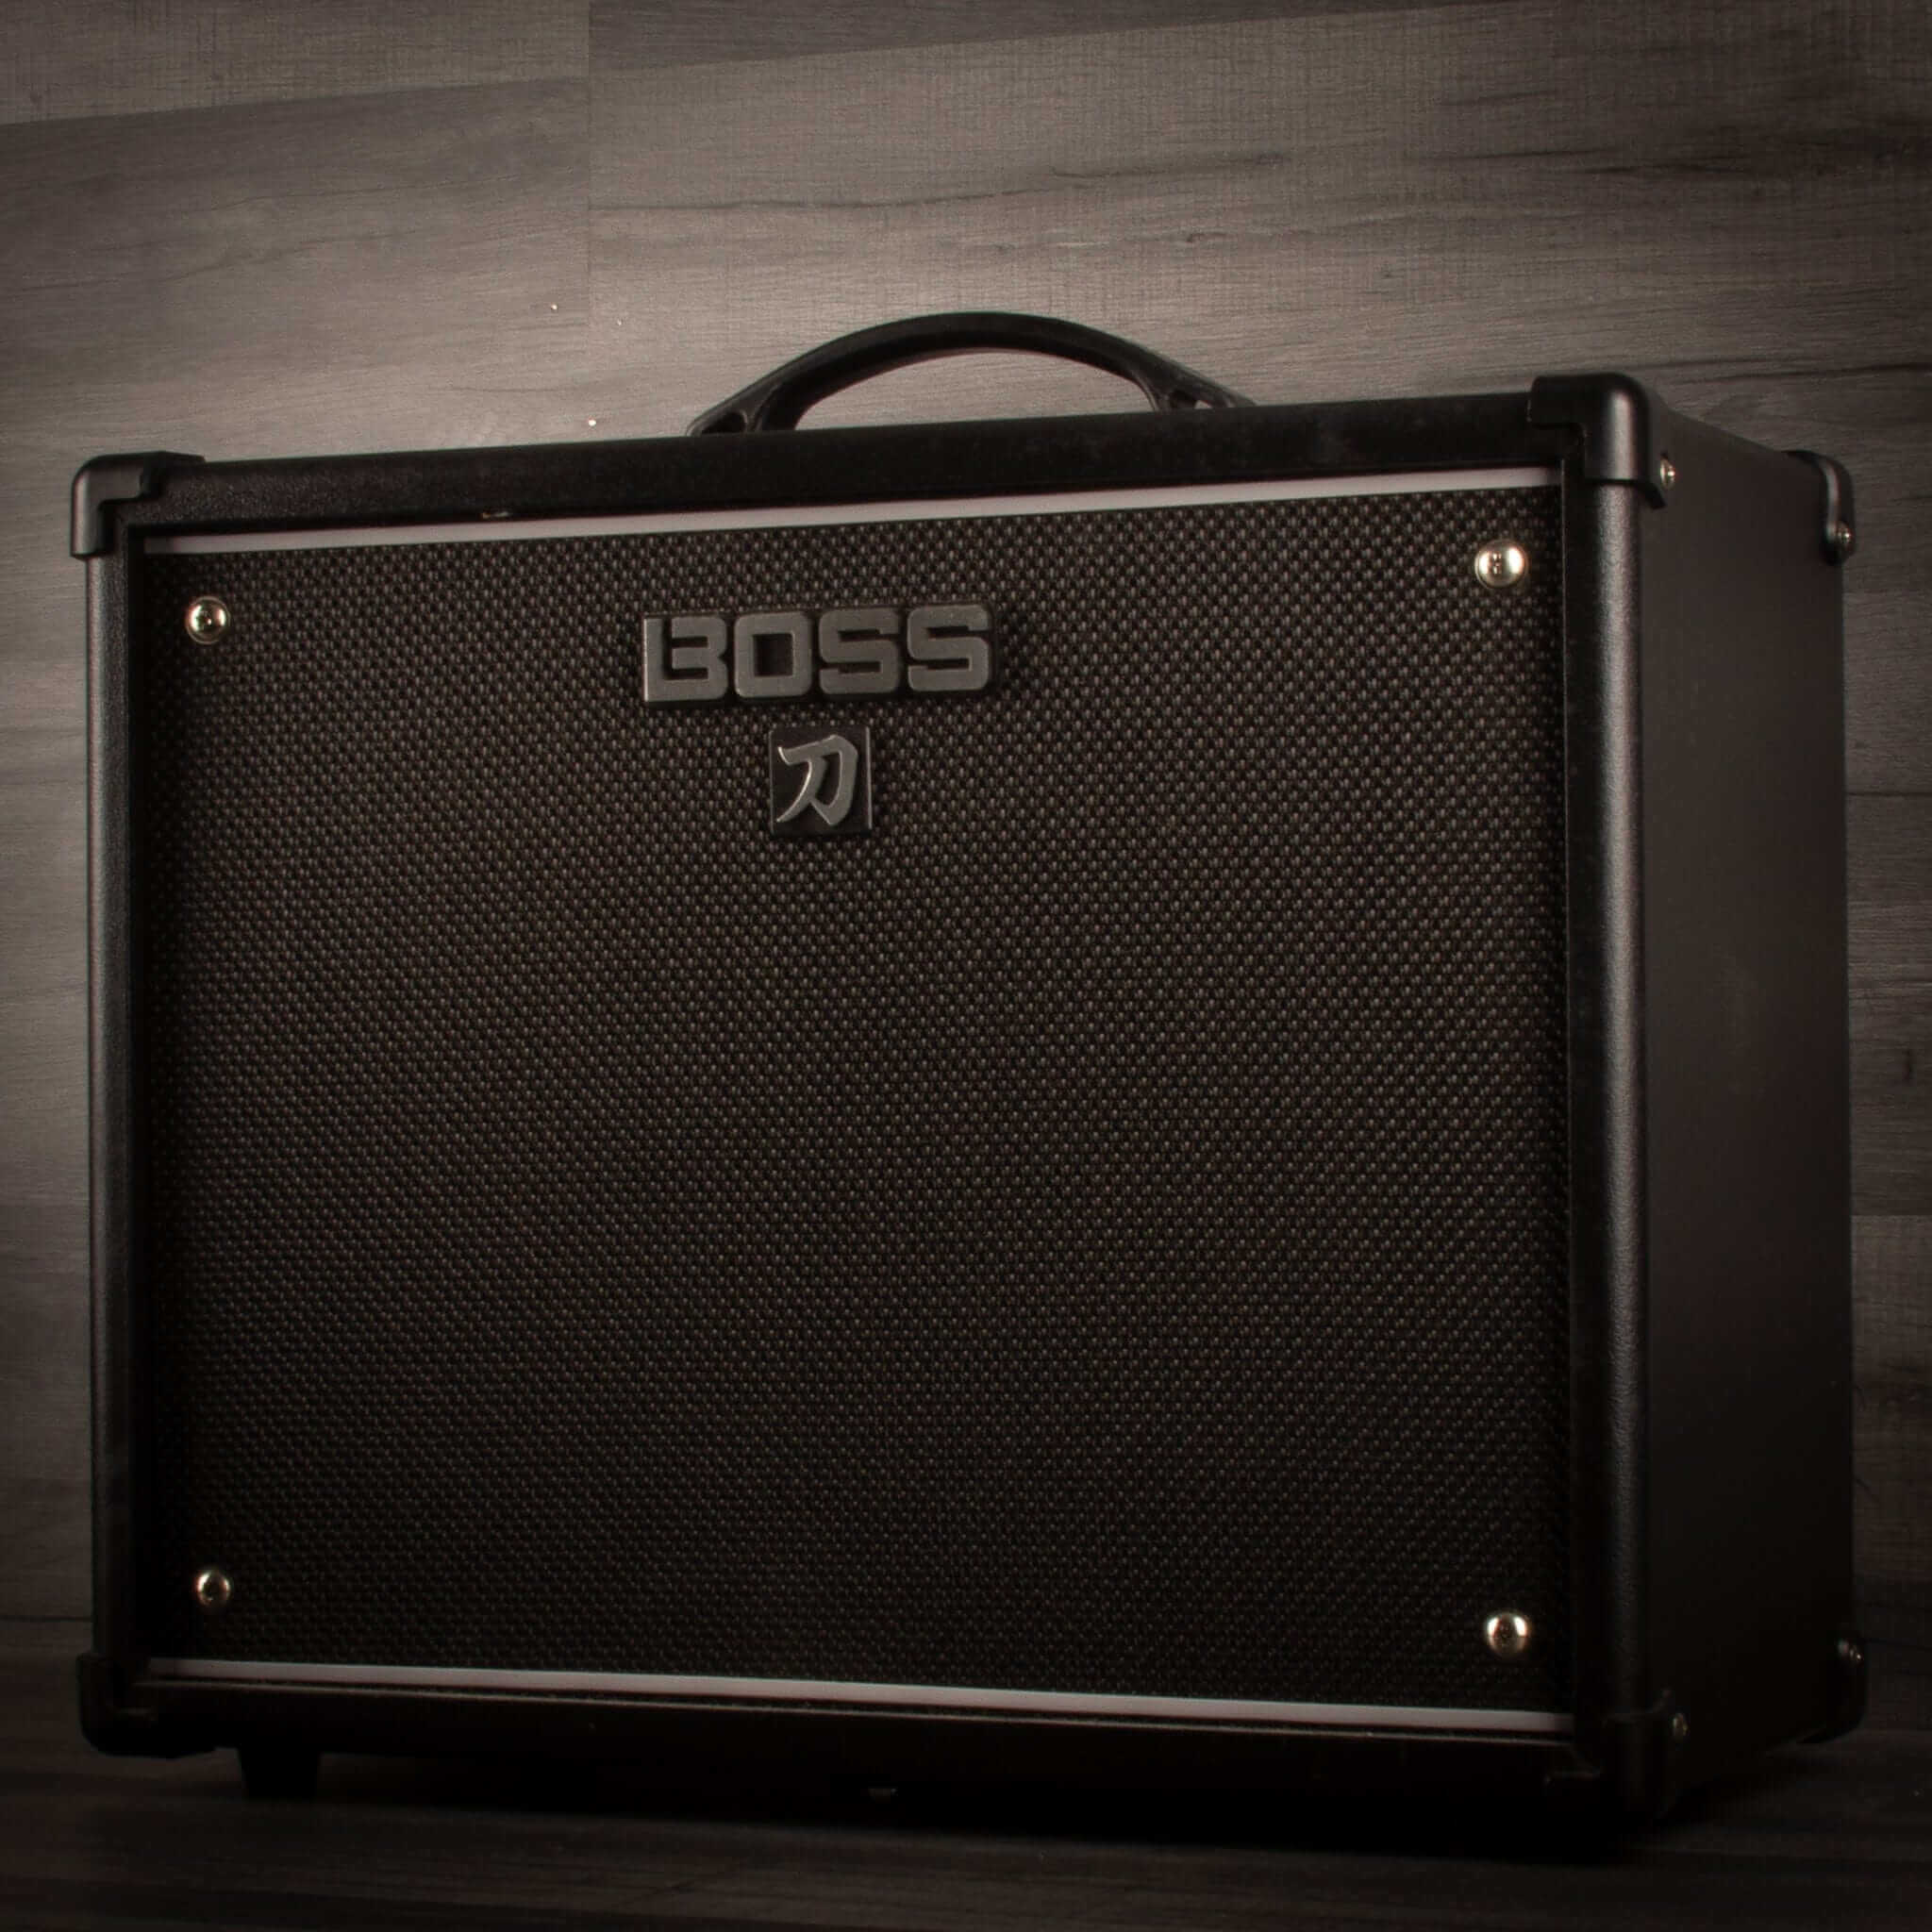 Boss Amplifier USED - Boss Katana 50